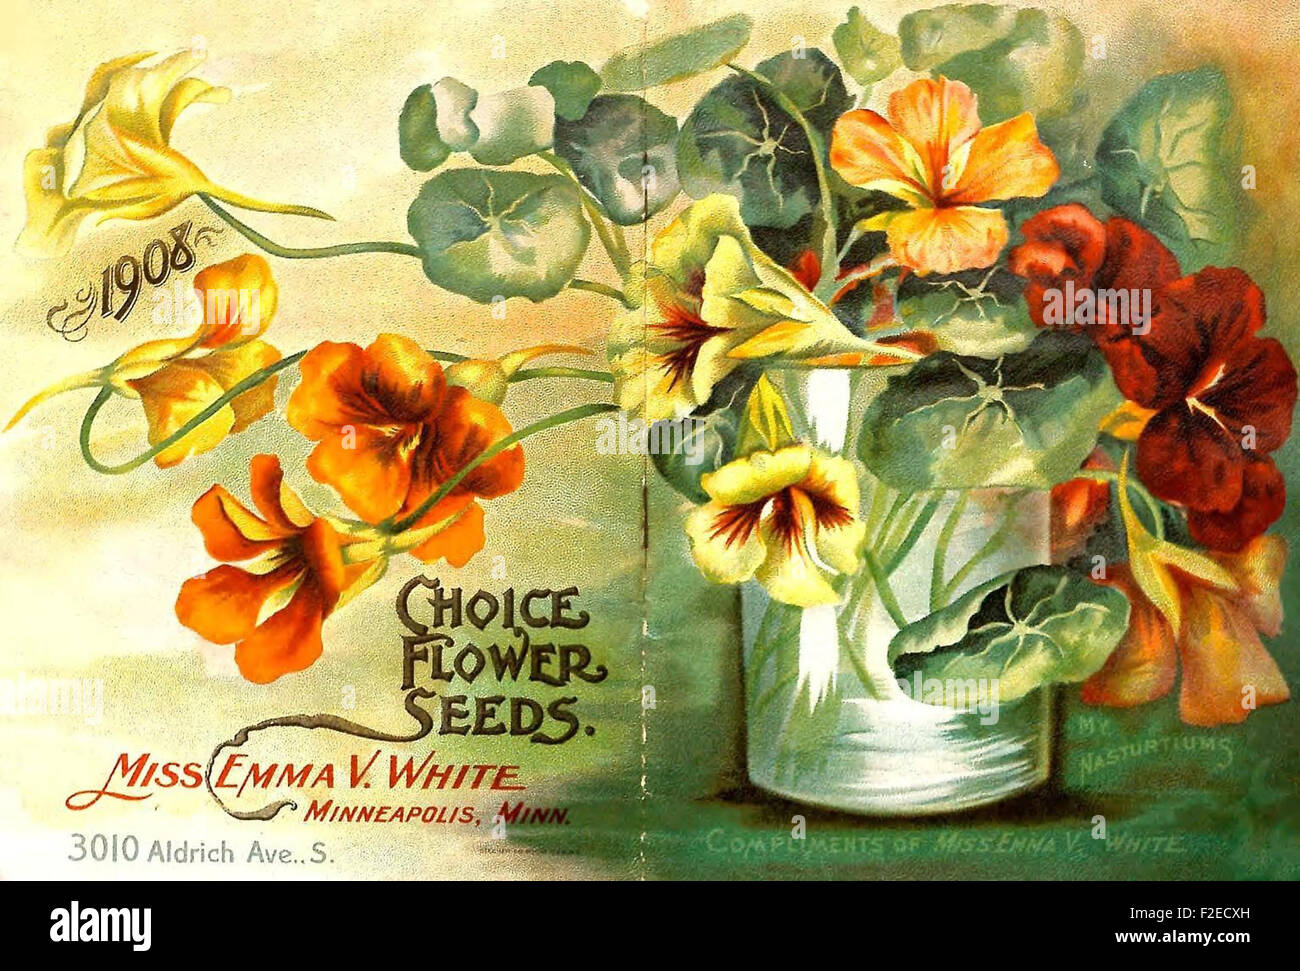 Choice flower seeds Stock Photo